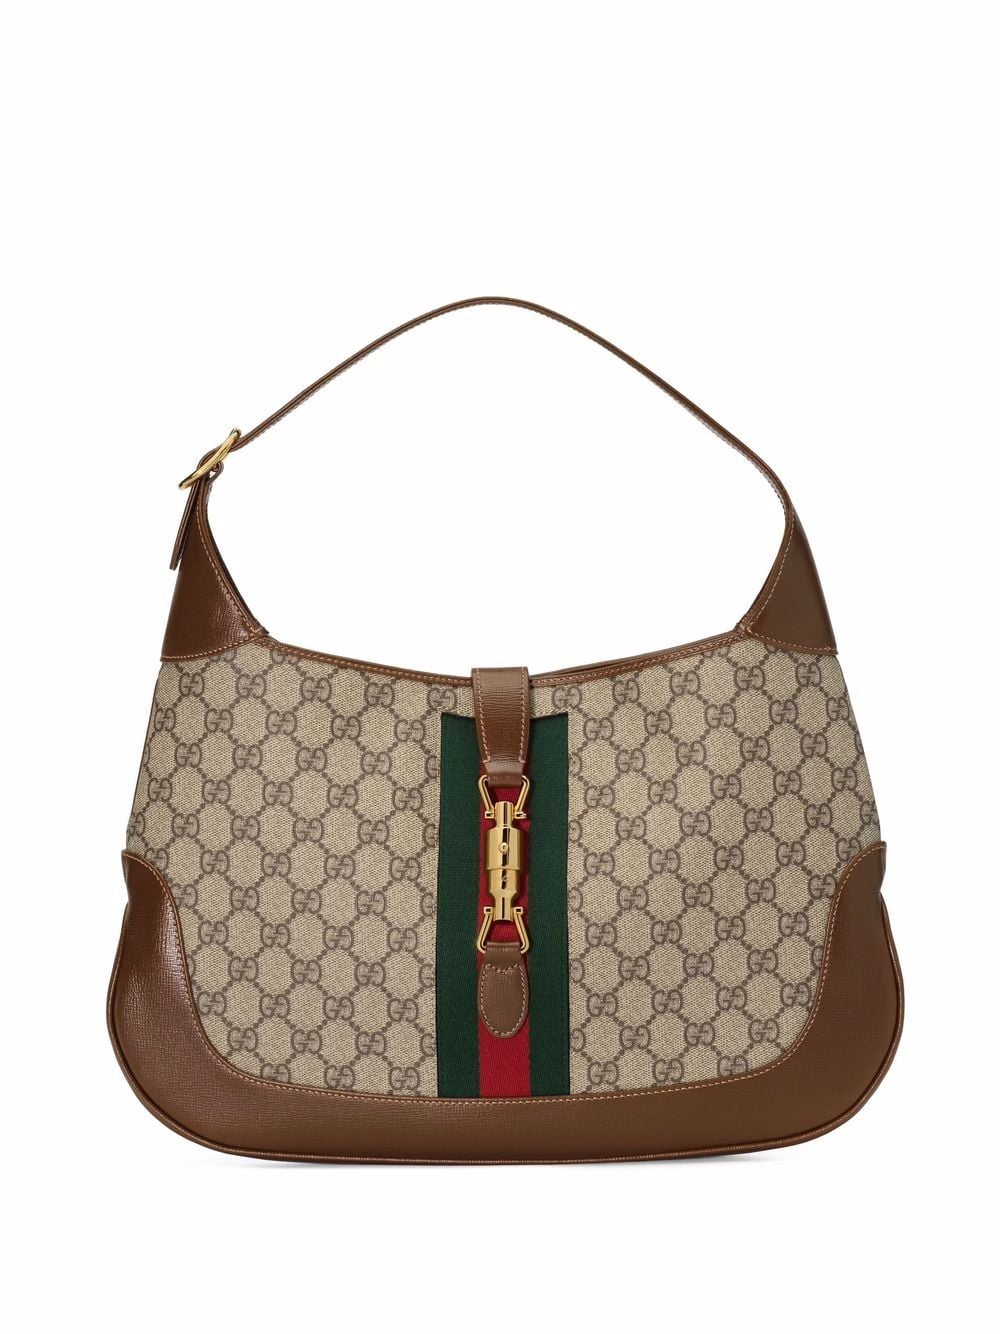 Jackie 1961 Medium Shoulder Bag in Multicoloured - Gucci